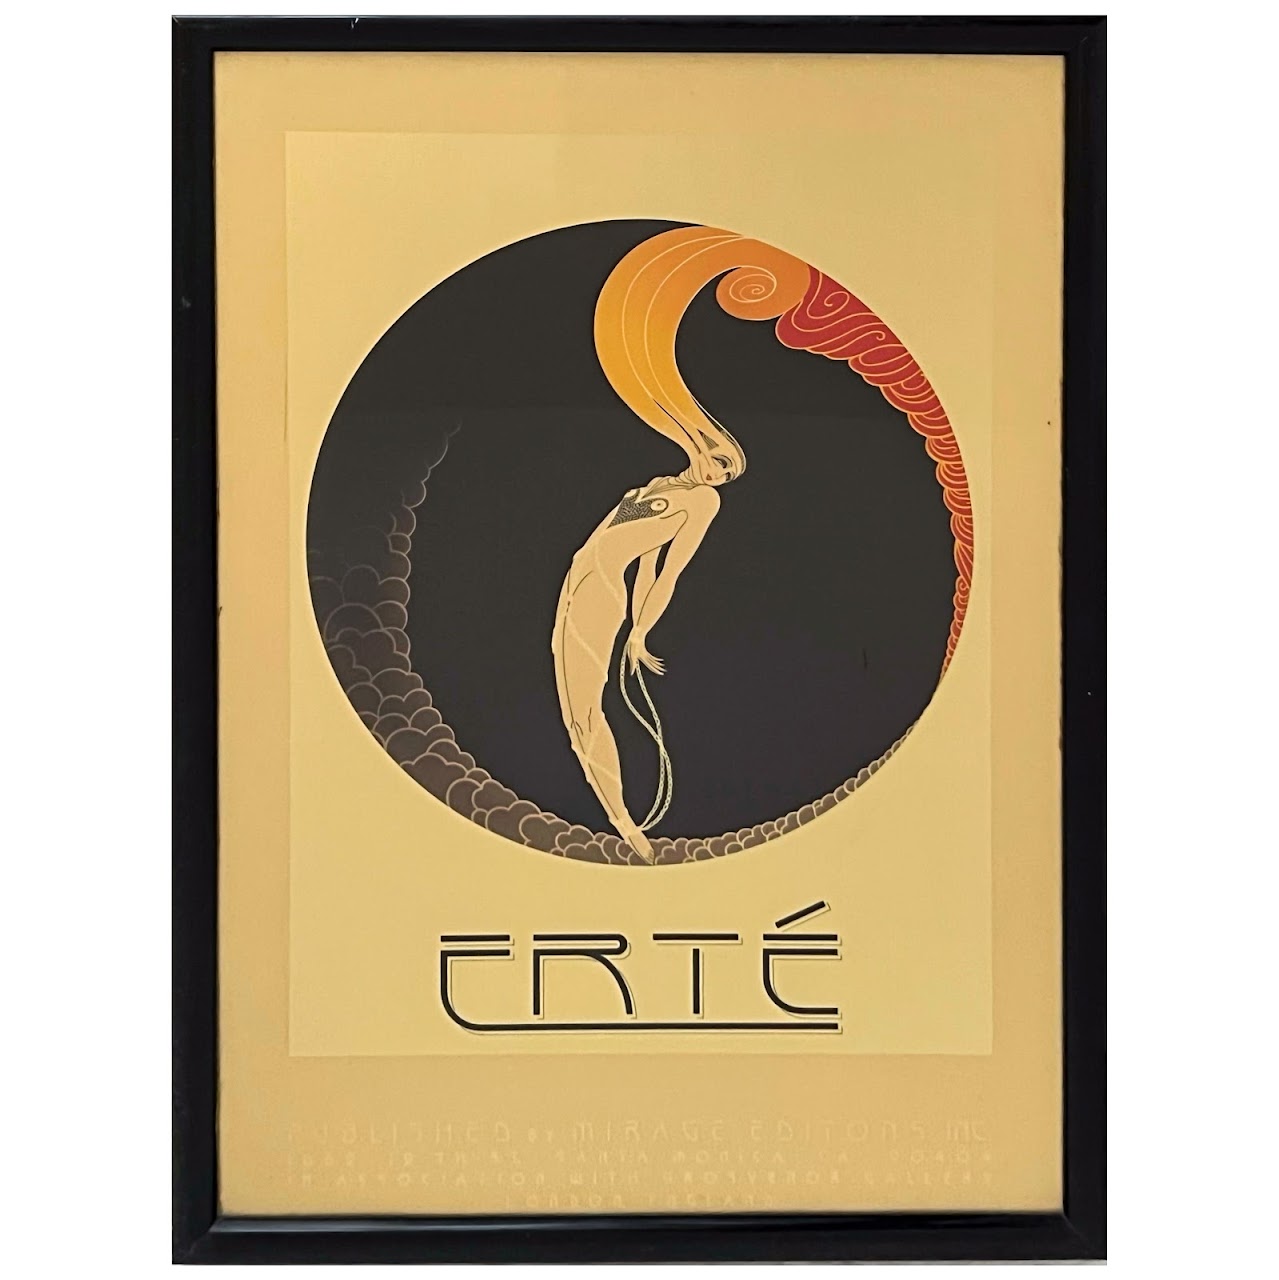 Erté 1979 'L'Amour' Mirage Editions Lithograph Poster